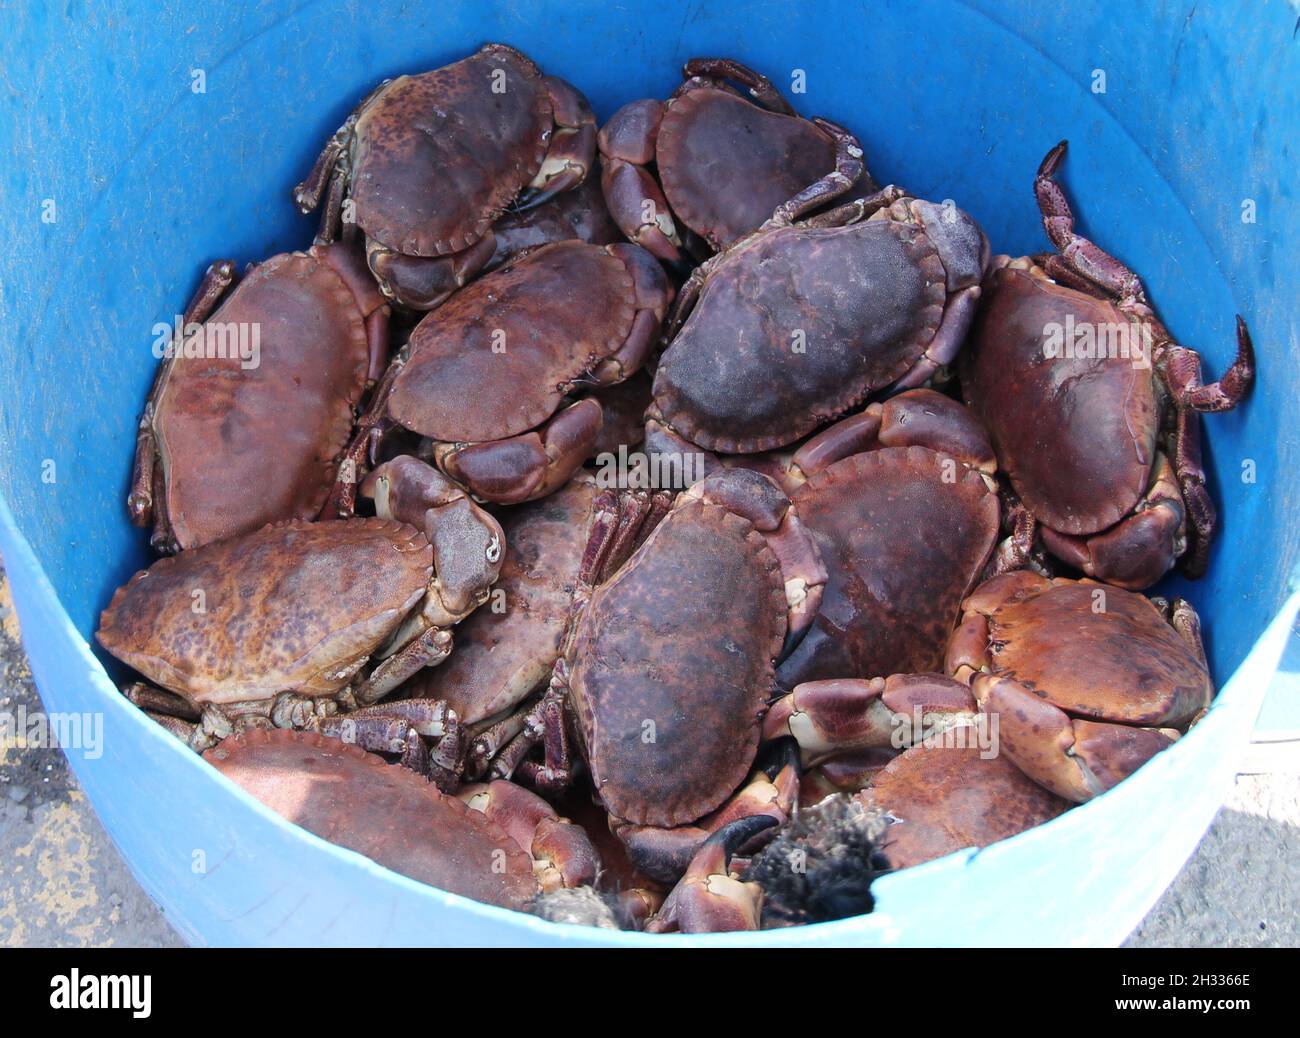 A Plastic Bucket Holding Freshly Caught Sea Crabs. Stock Photo